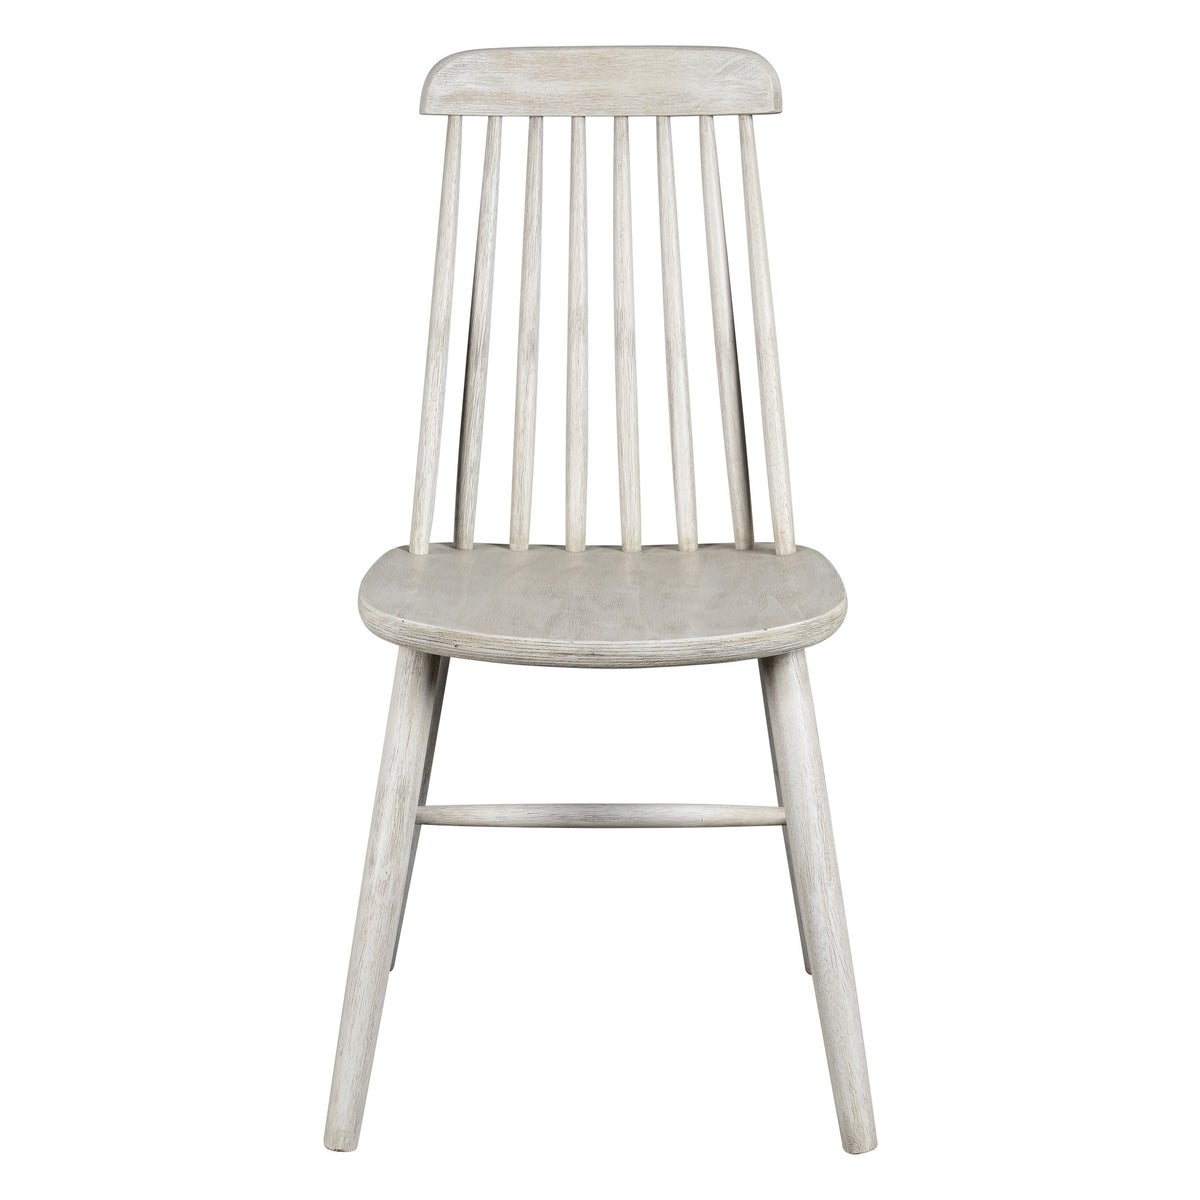 -Lloyd Chair (Cottage White)